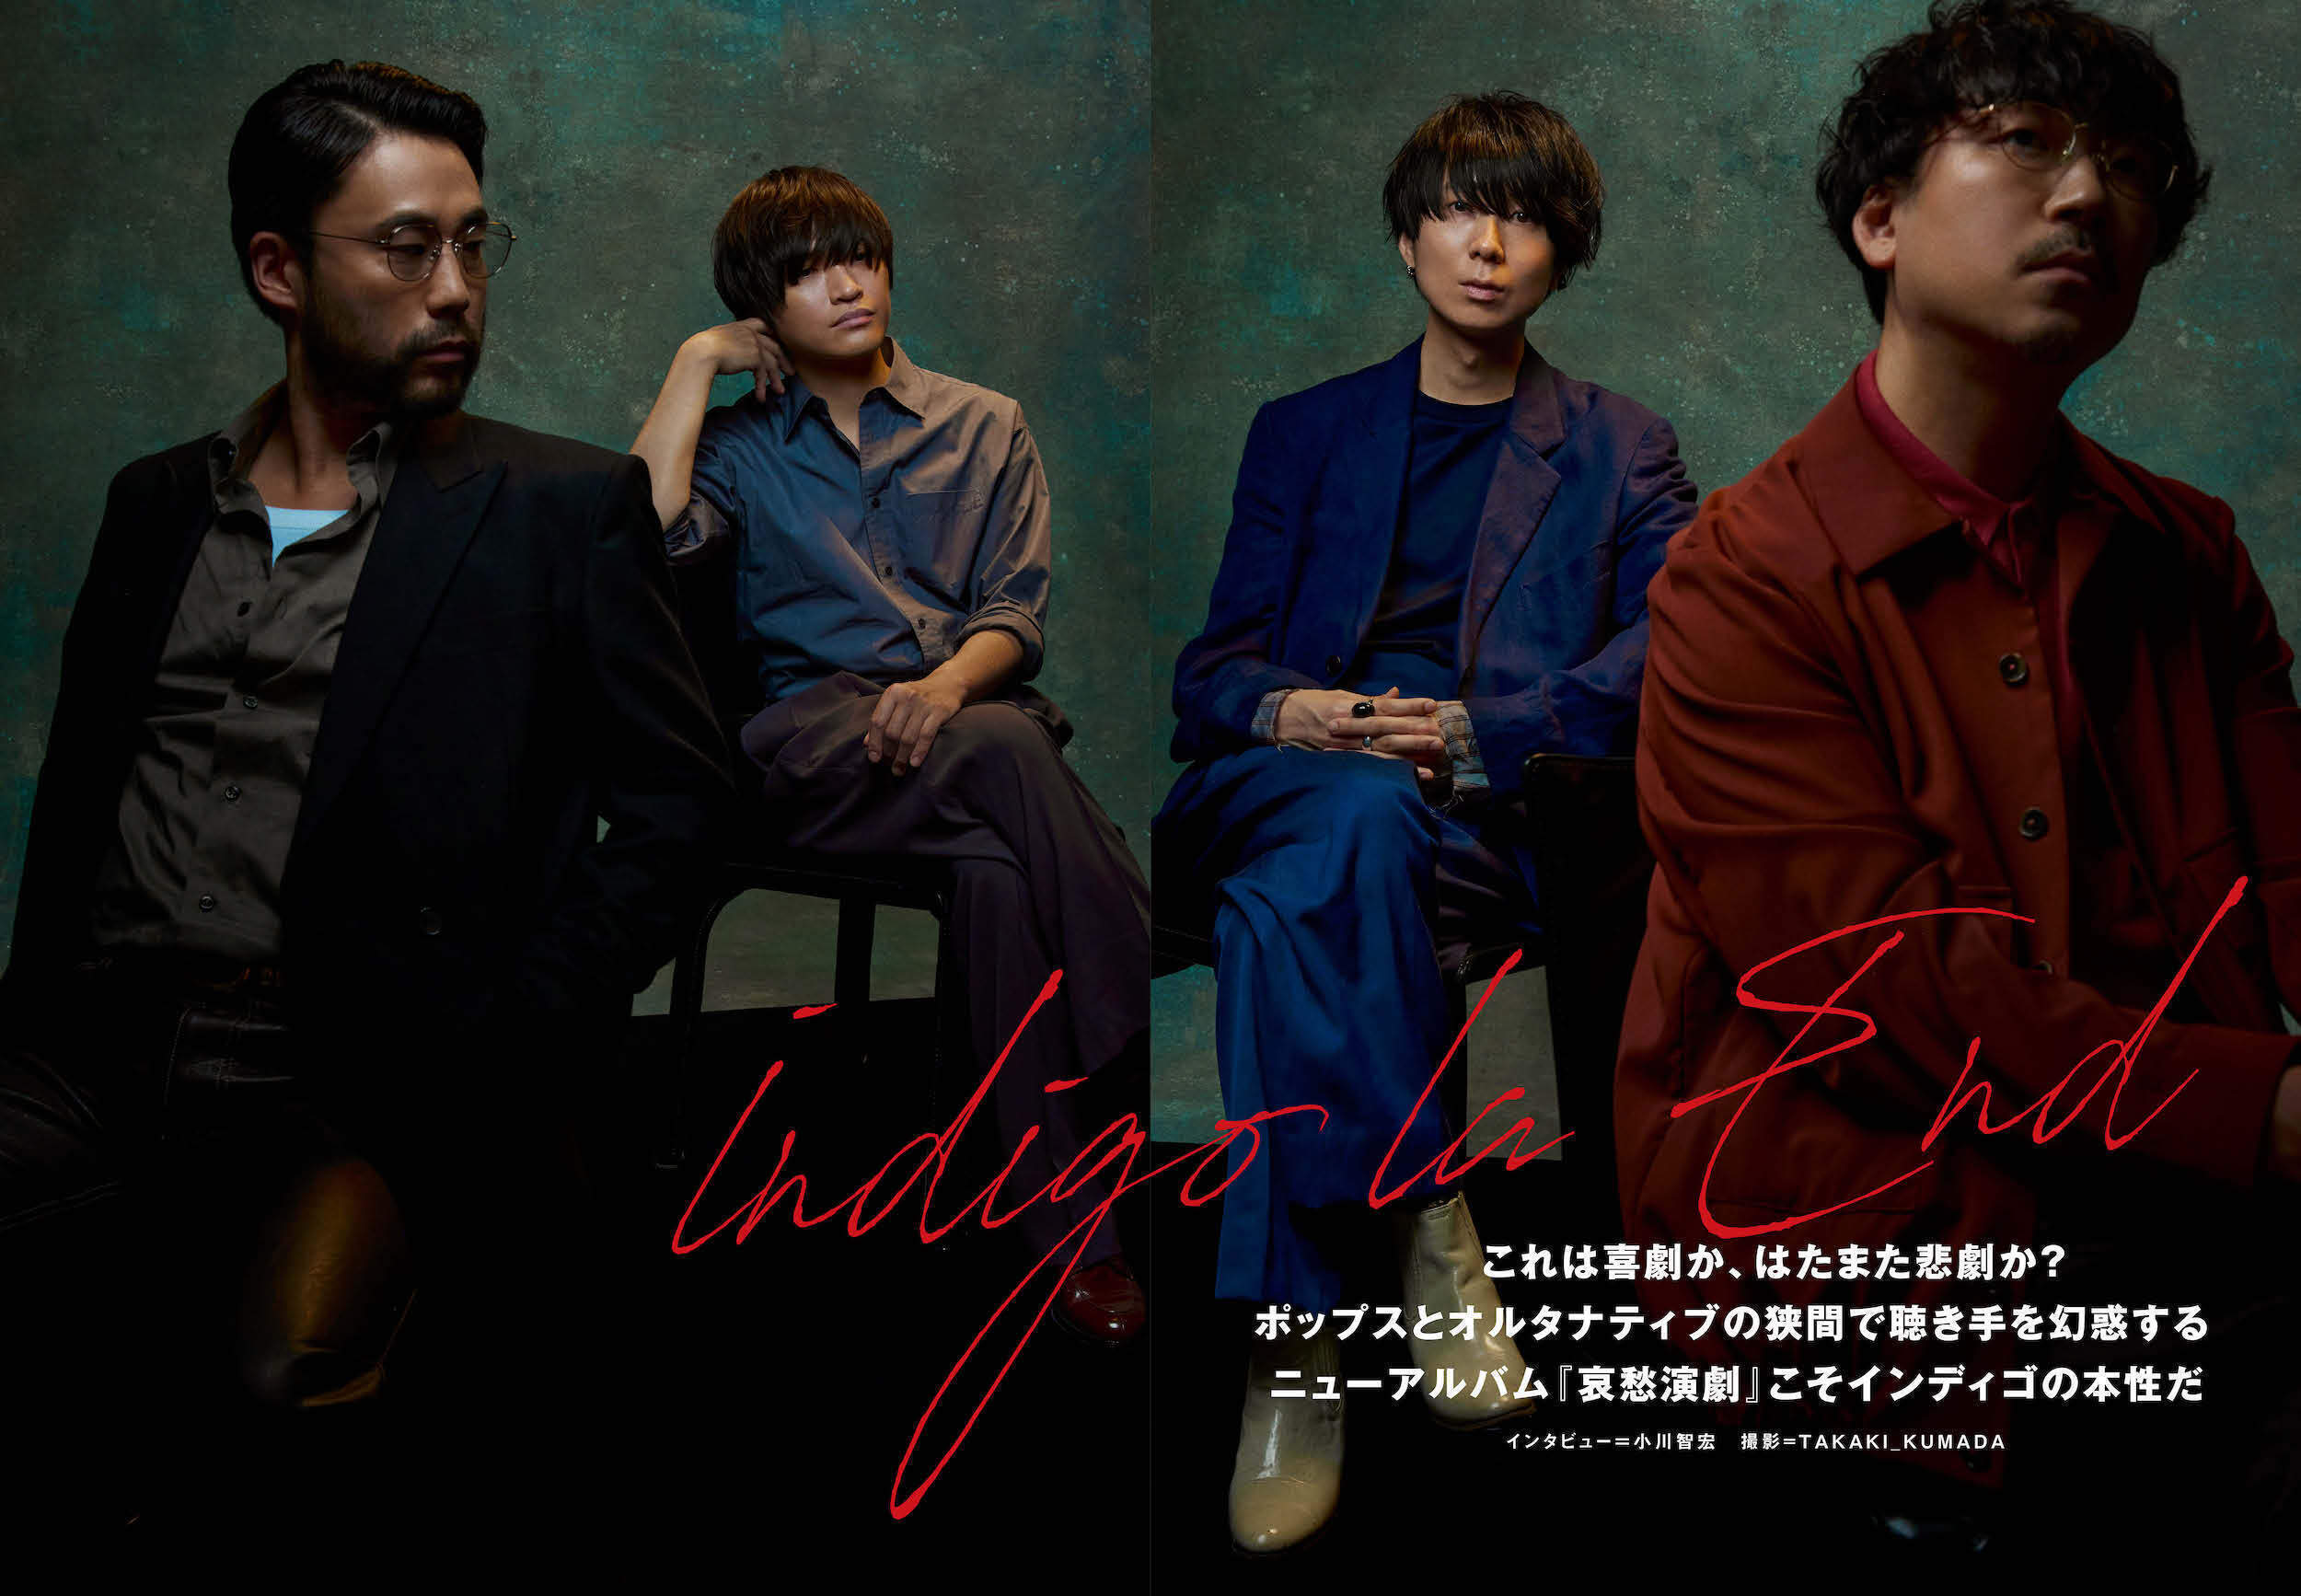 【JAPAN最新号】indigo la End、これは喜劇か、はたまた悲劇か？ ポップスとオルタナティブの狭間で聴き手を幻惑するニューアルバム『哀愁演劇』こそインディゴの本性だ